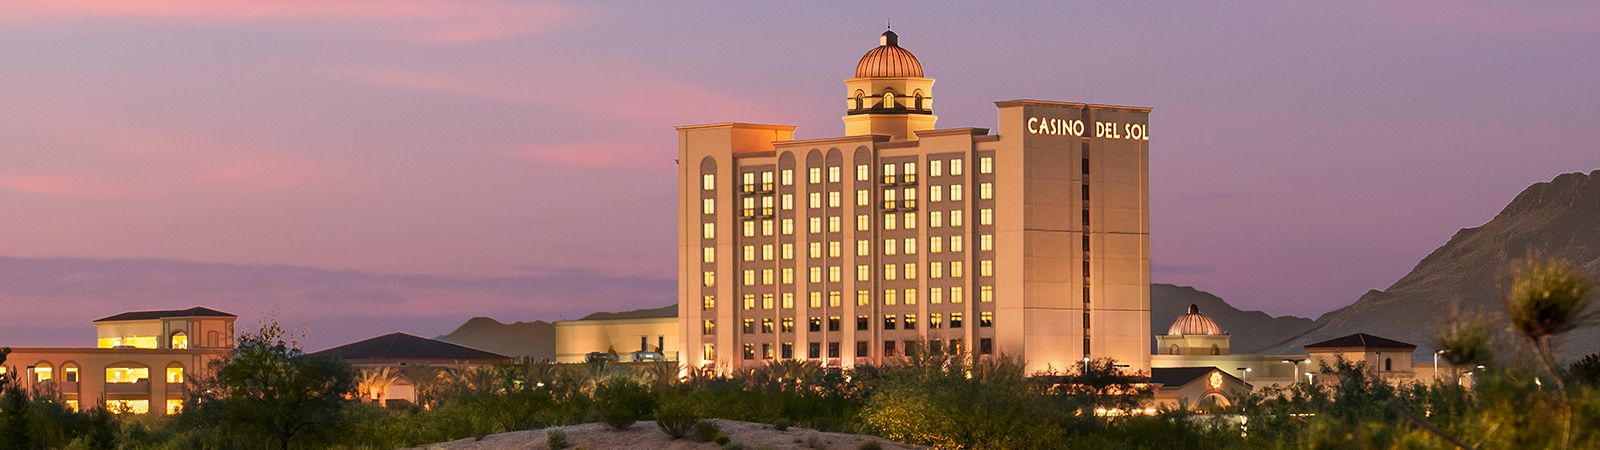 Casino Del Sol Resort in Tucson AZ 